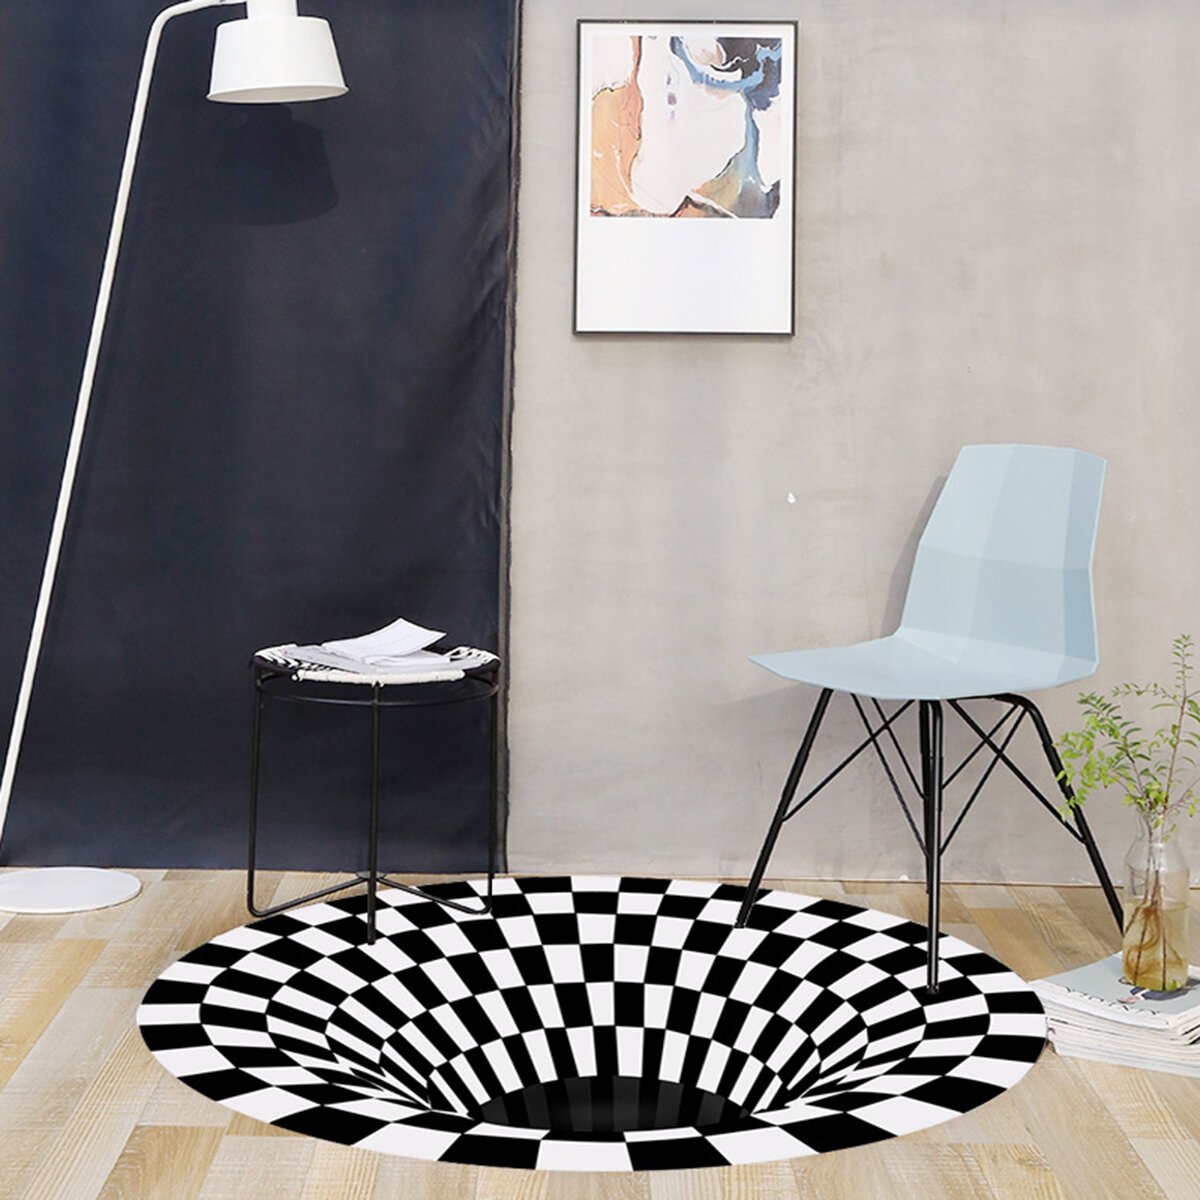 3D Round Carpet Checkered Vortexs Optical Illusions Non Slip Area Rug Durbale Anti-Slip Floor Mat Non-Woven Black White Doormat For Living Dinning Room Bedroom Kitchen